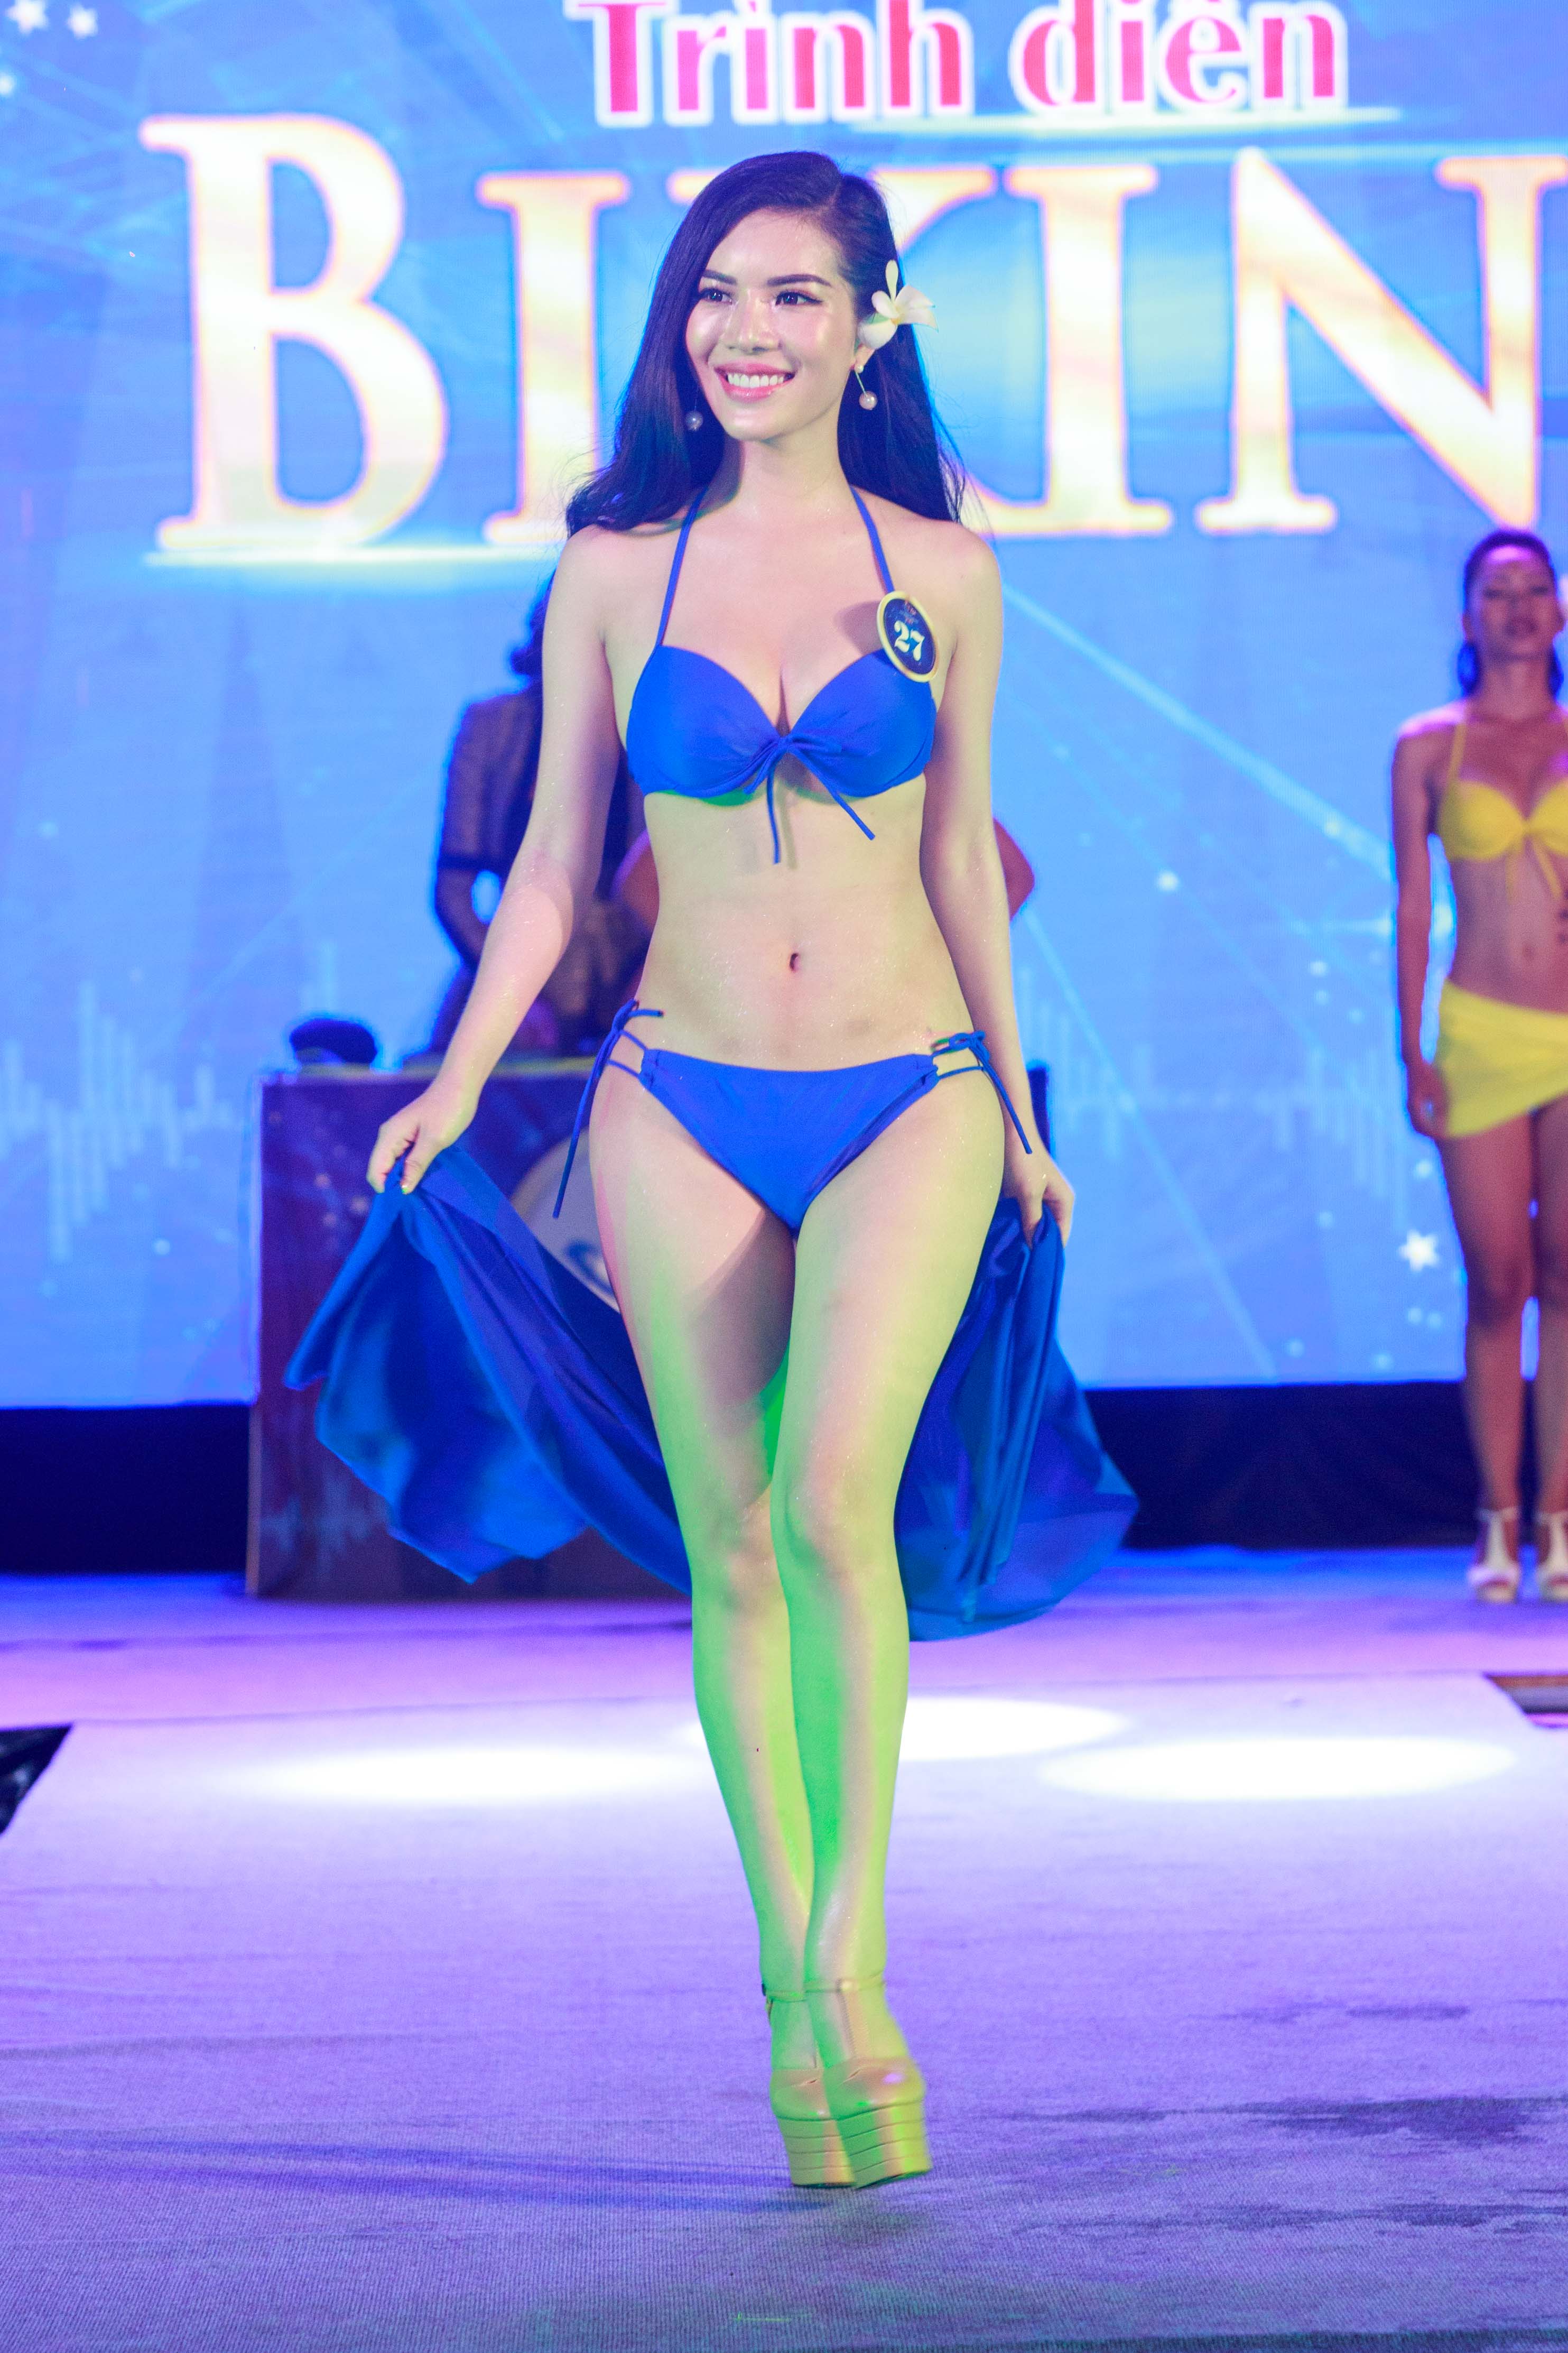 Miss ASEAN bikini beauties stunned Phu Yen audience